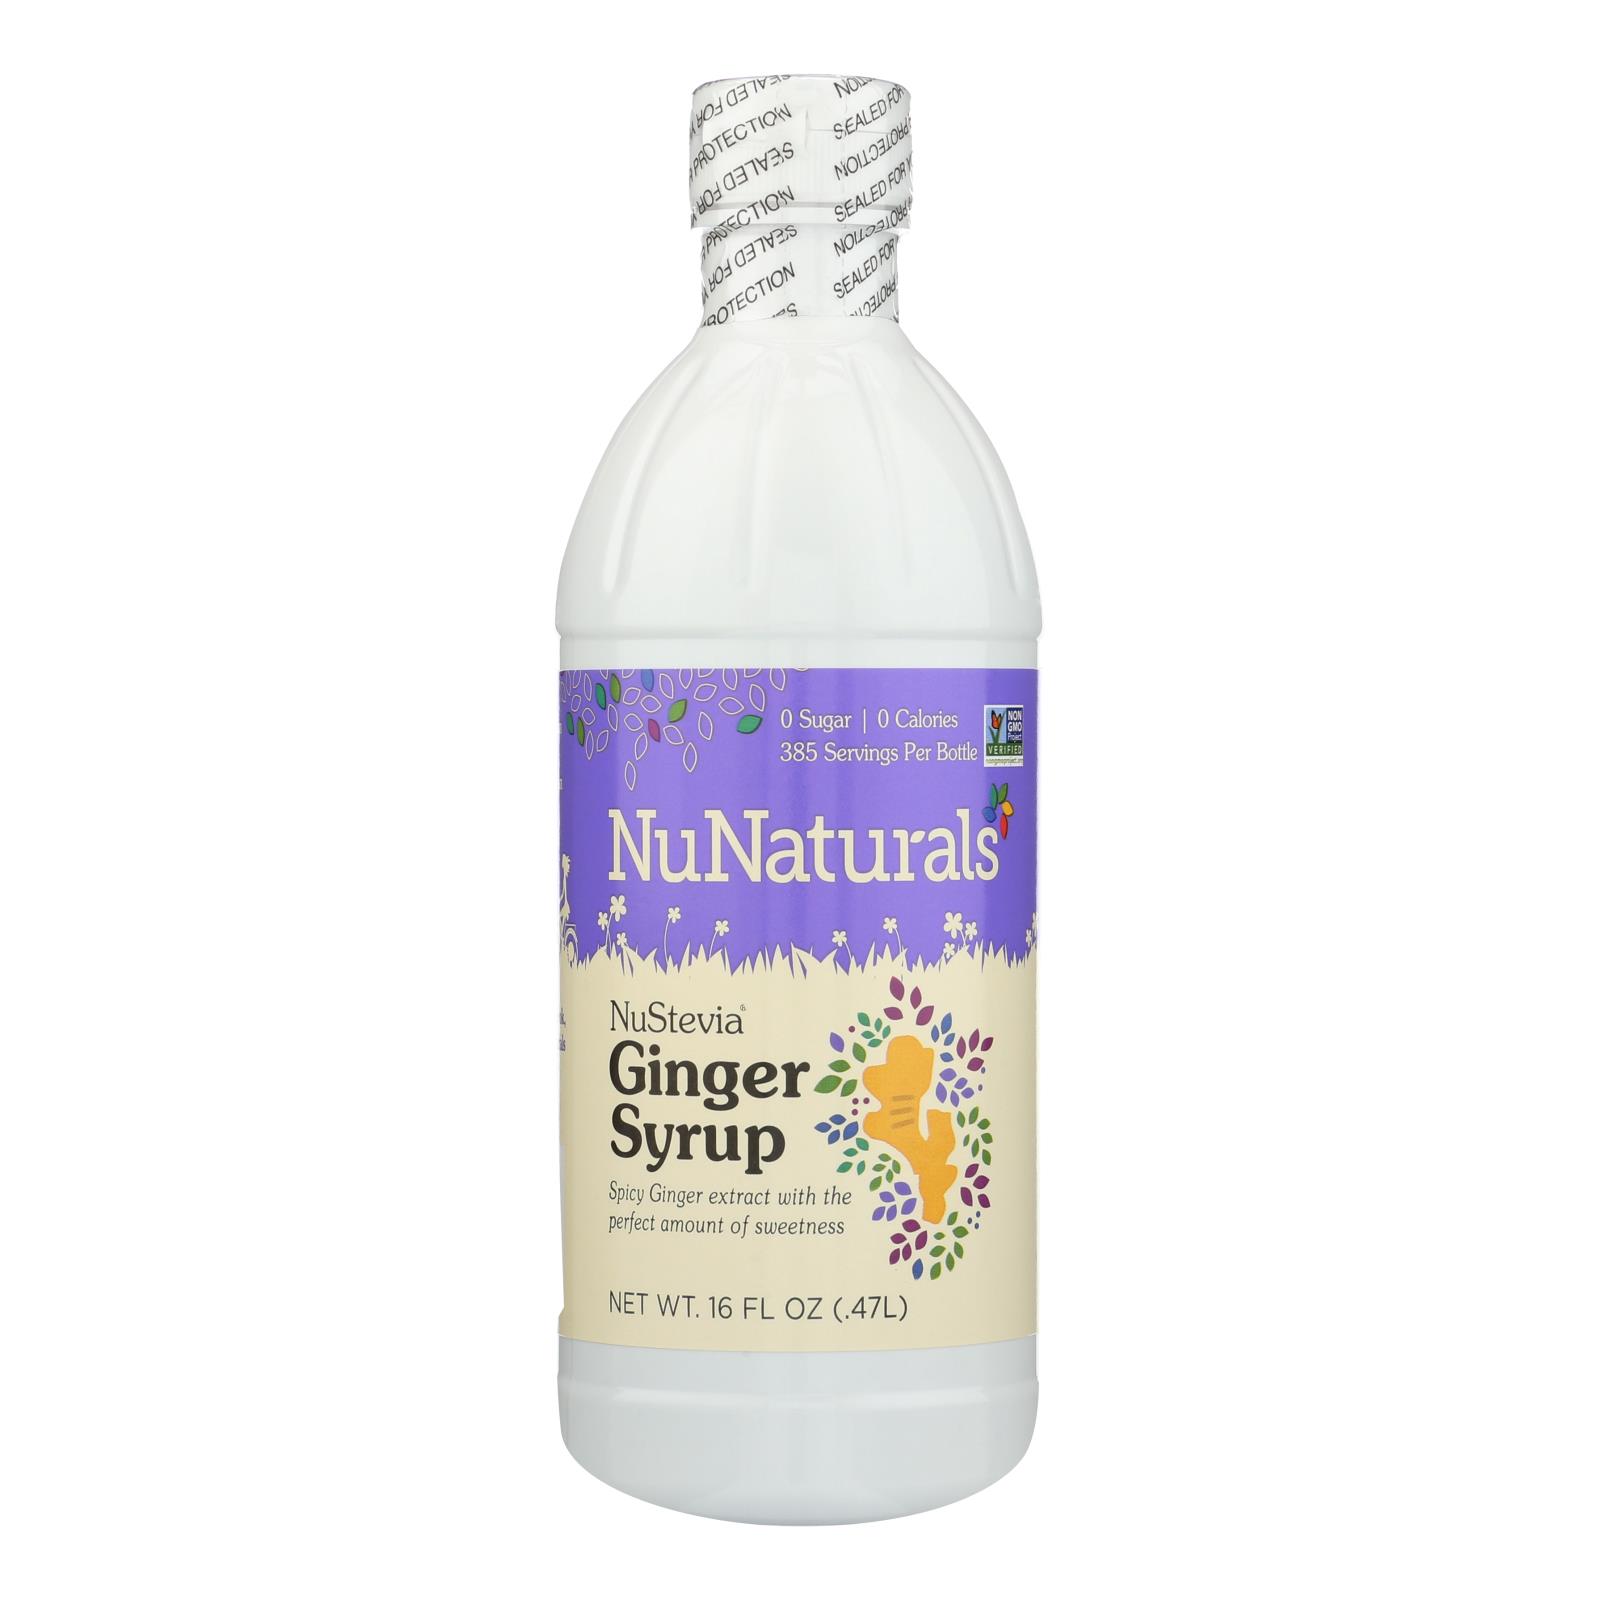 Nunaturals - Stevia Ginger Syrup - 1 Each - 16 OZ